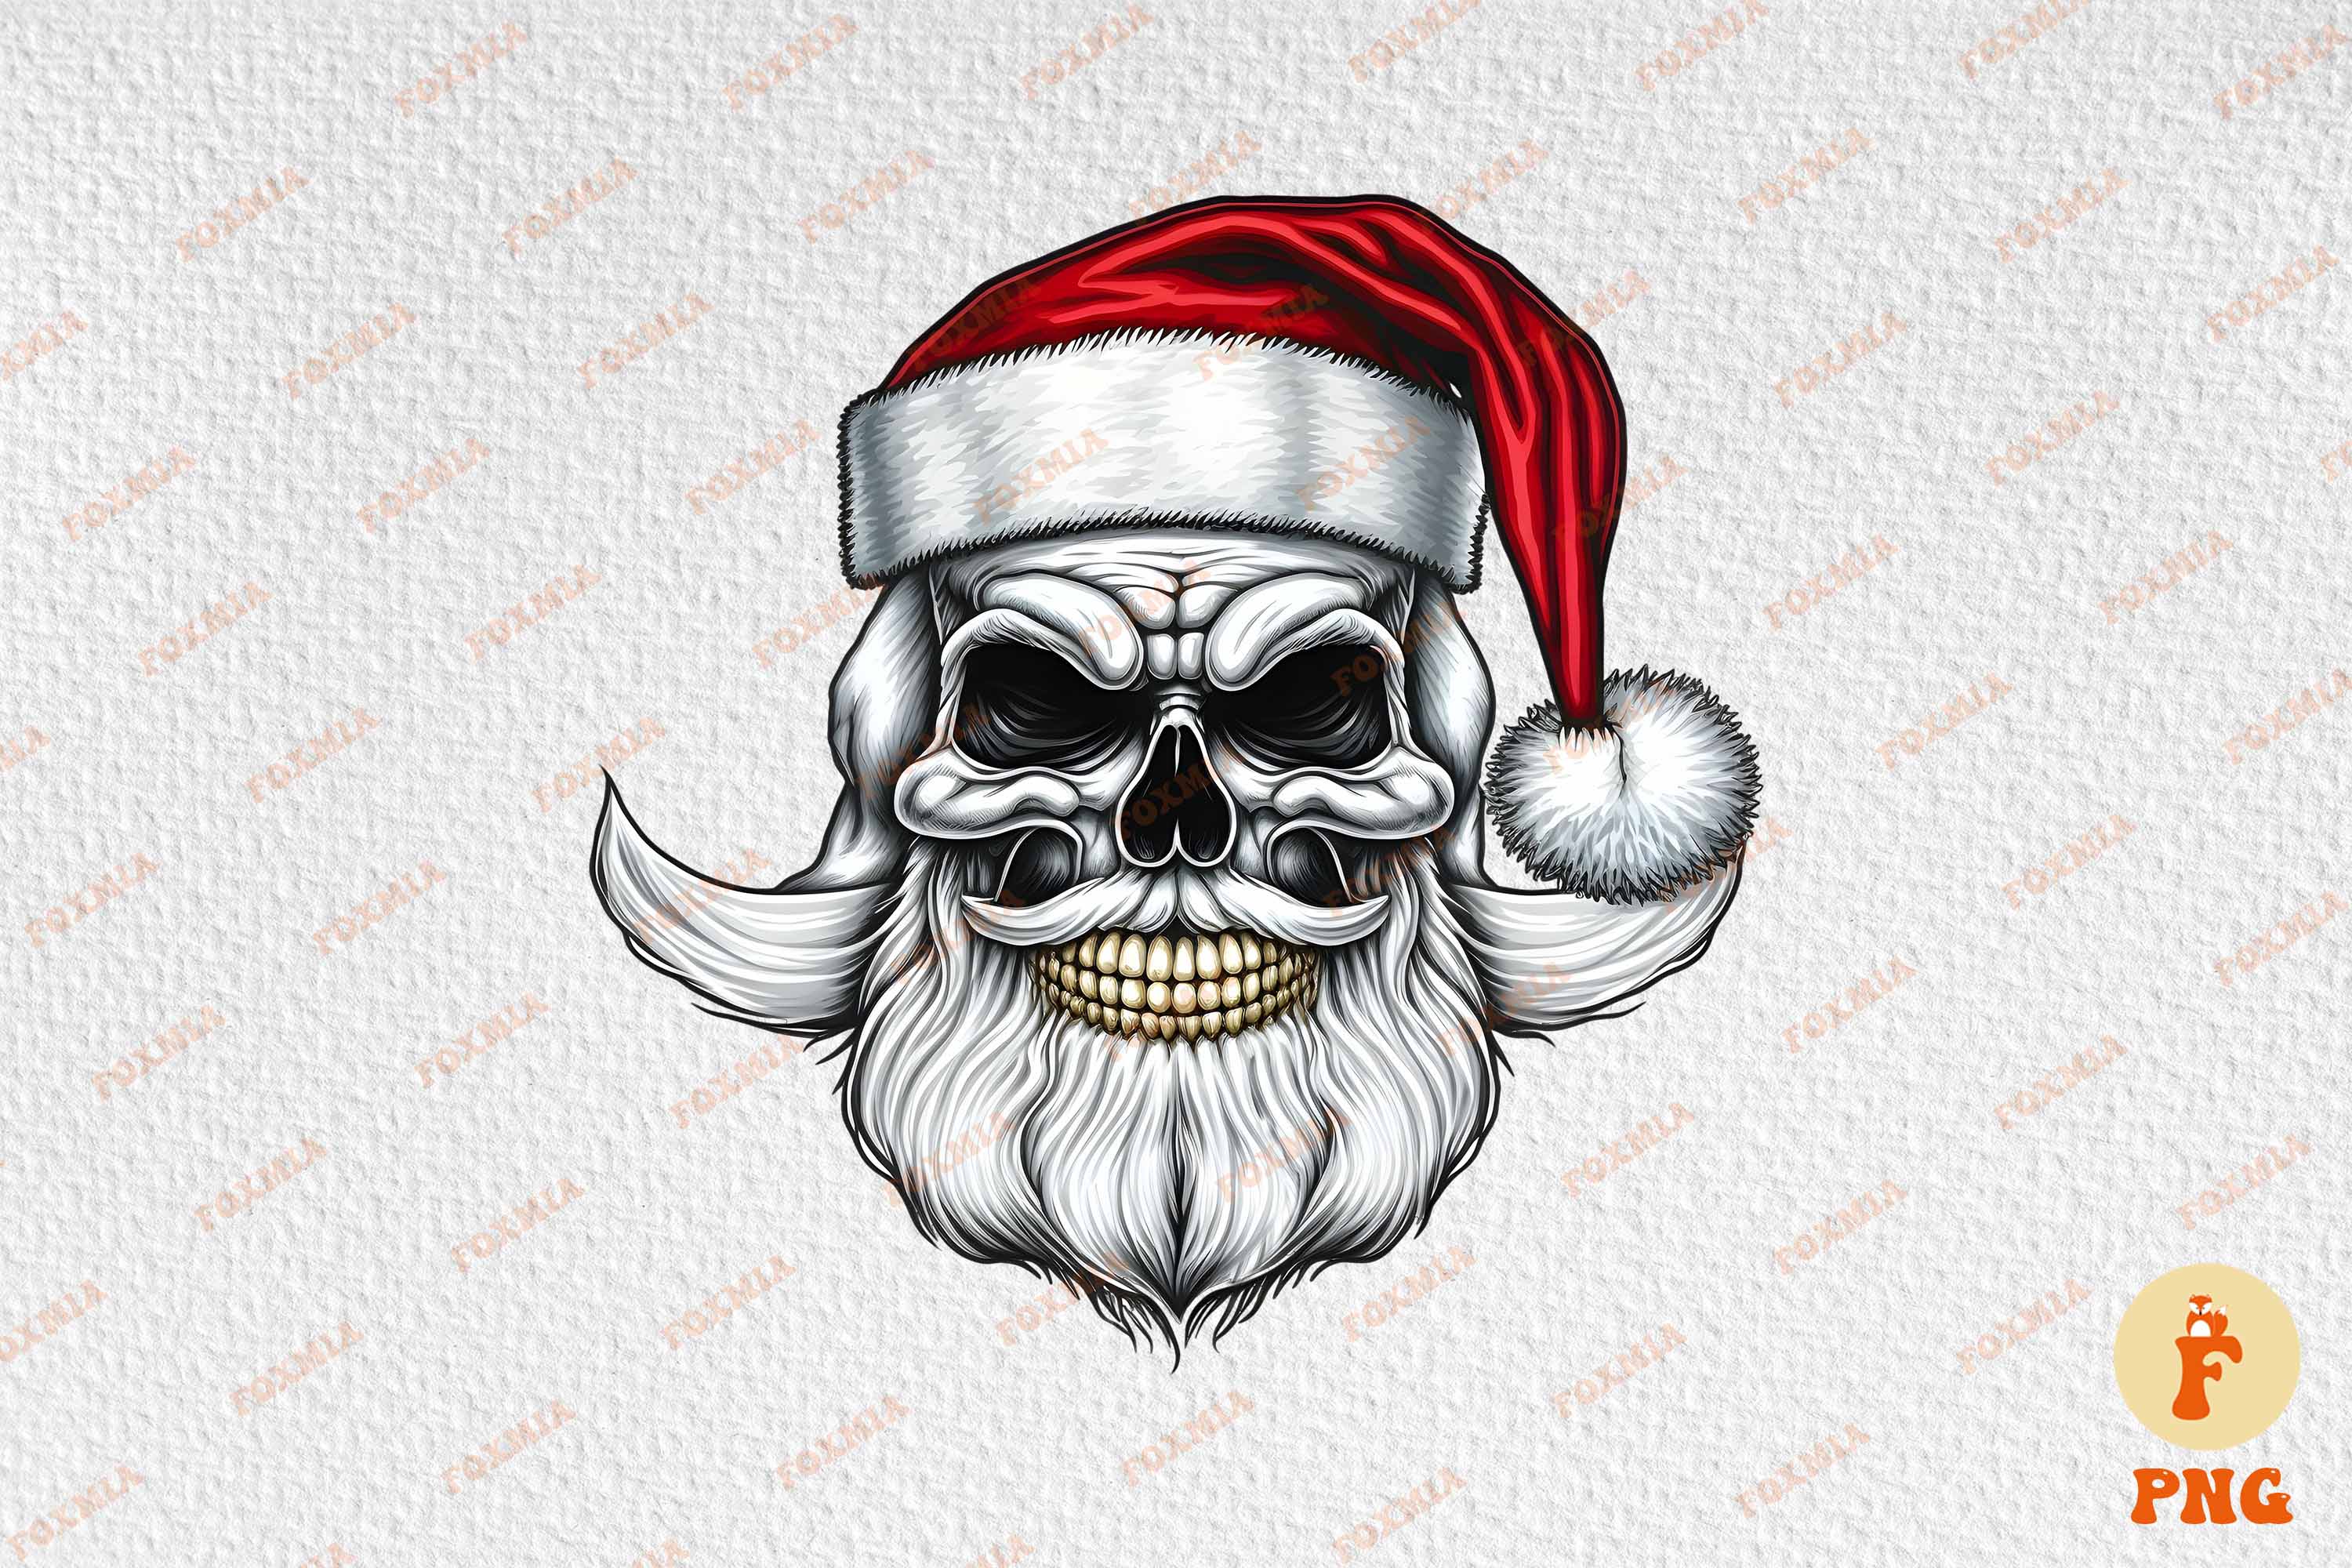 Wonderful image of Santa's skull.